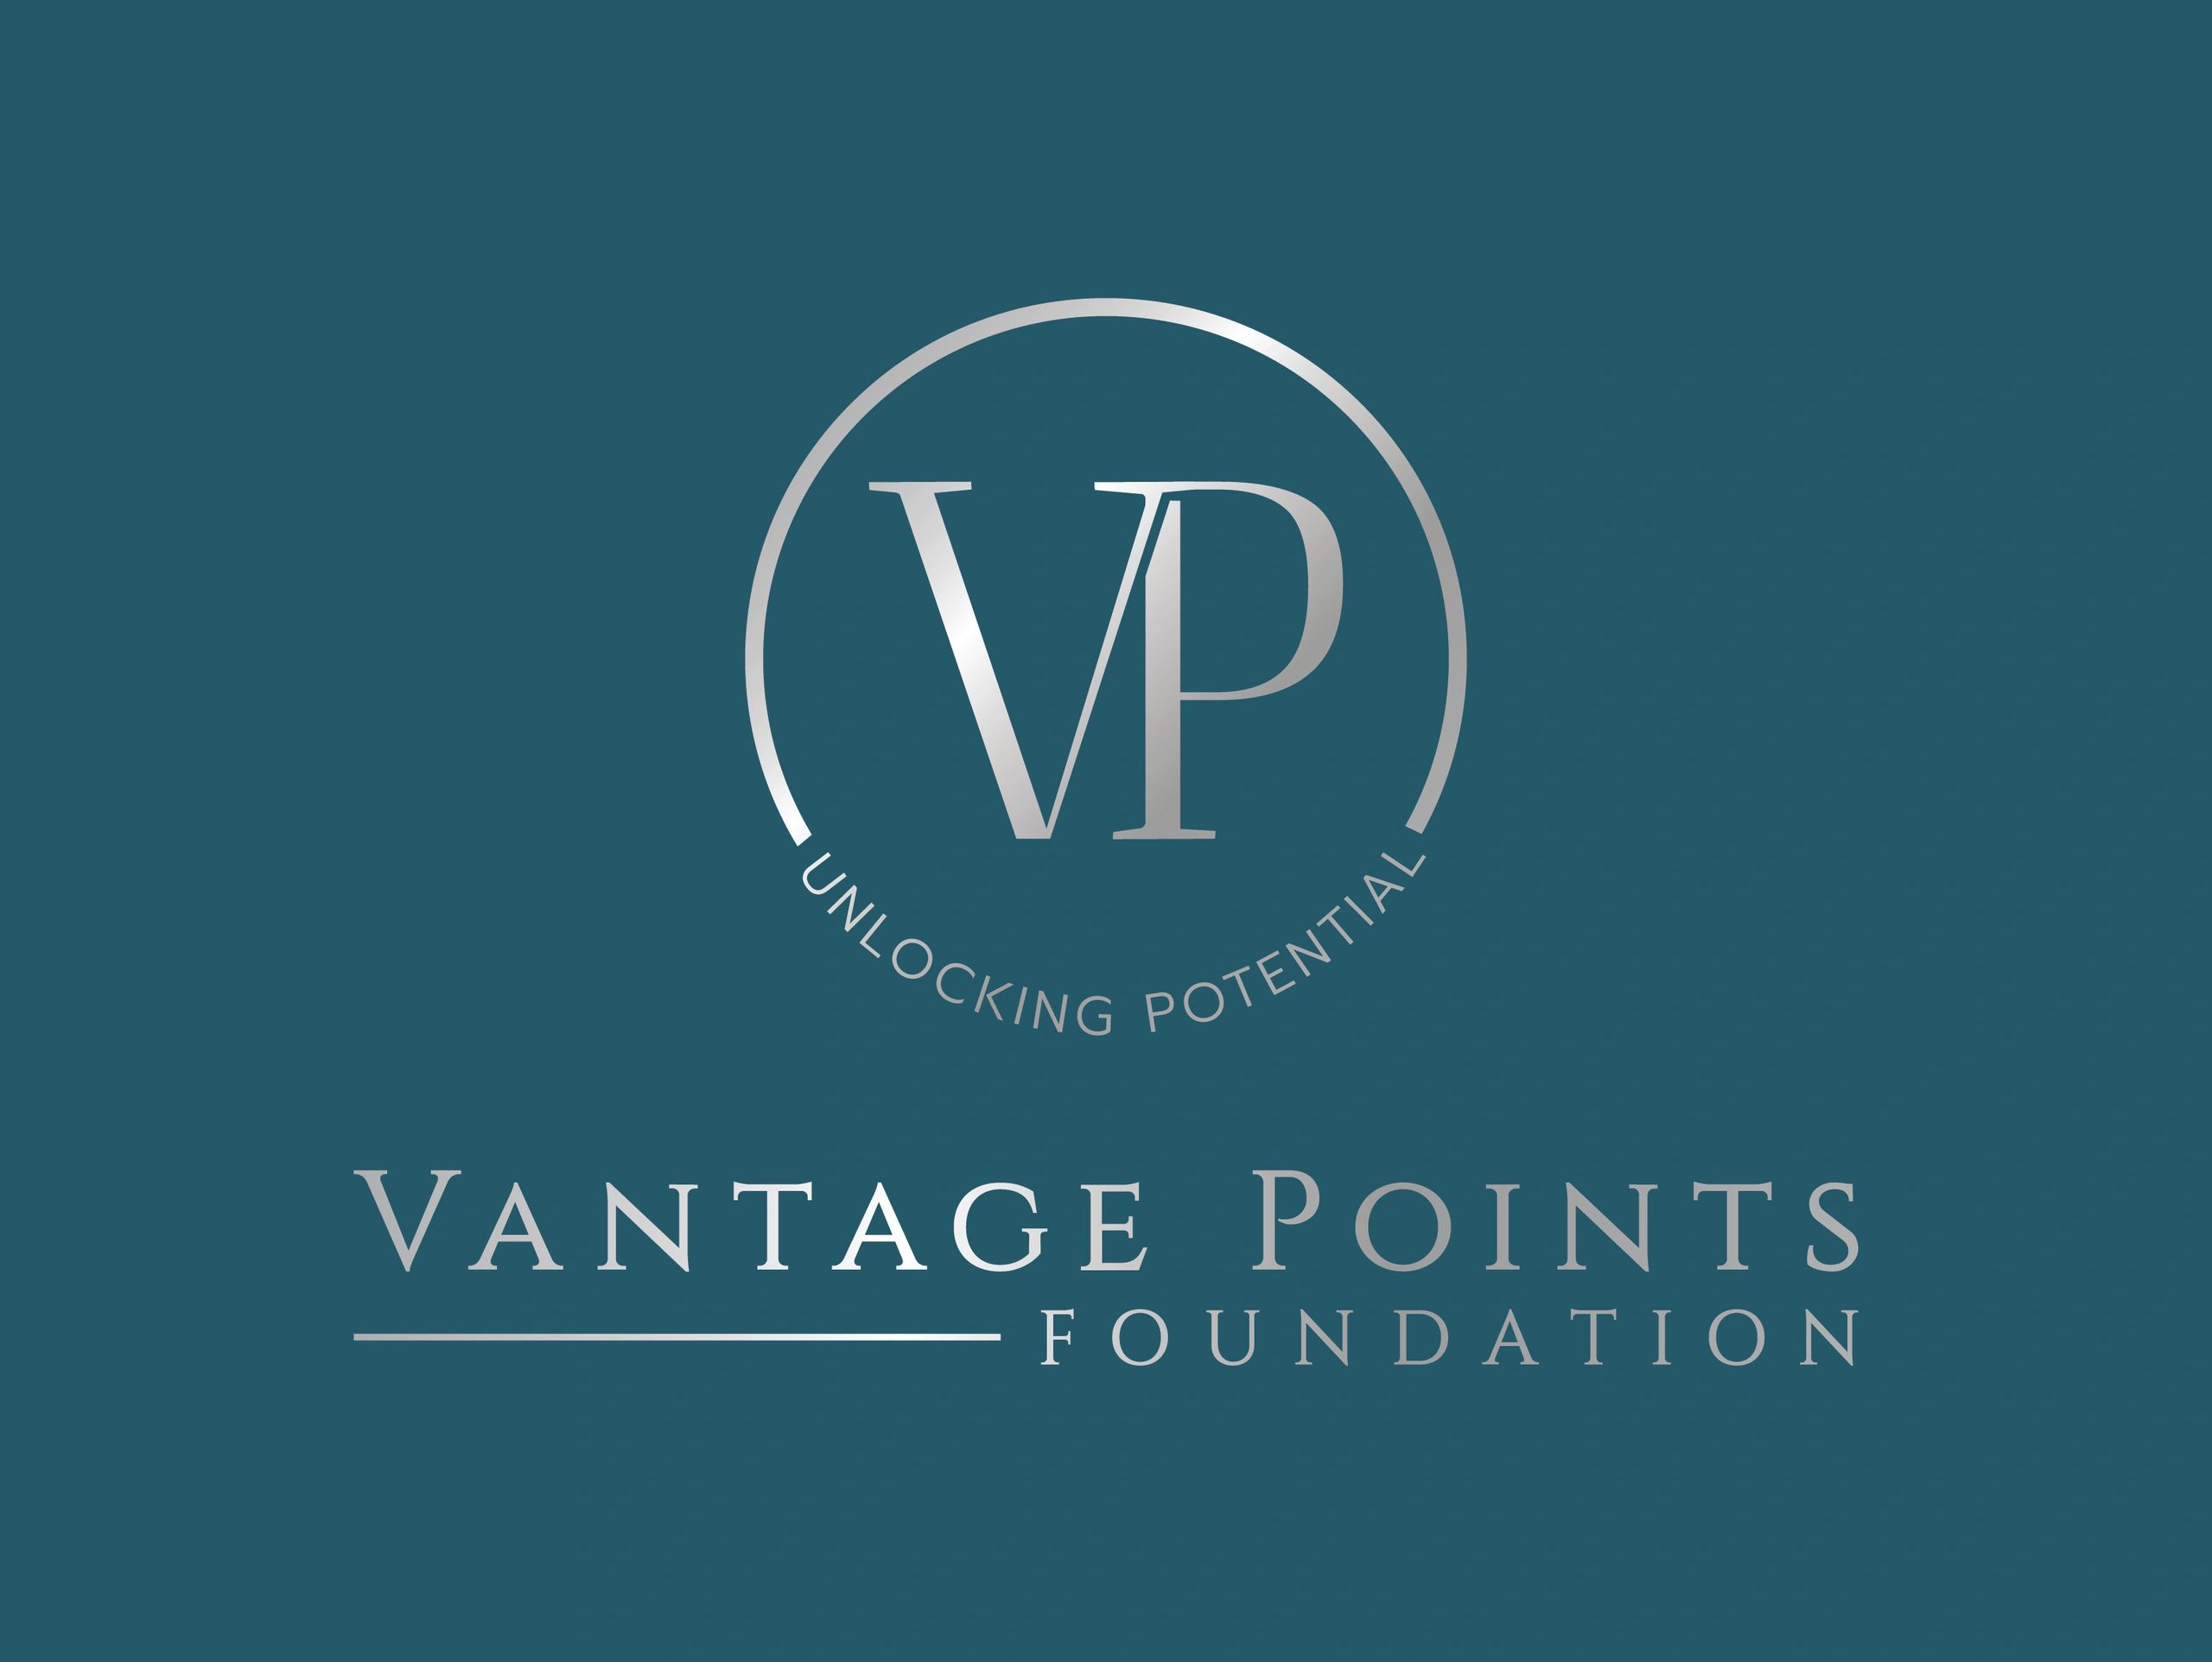 Vantage Points Foundation logo